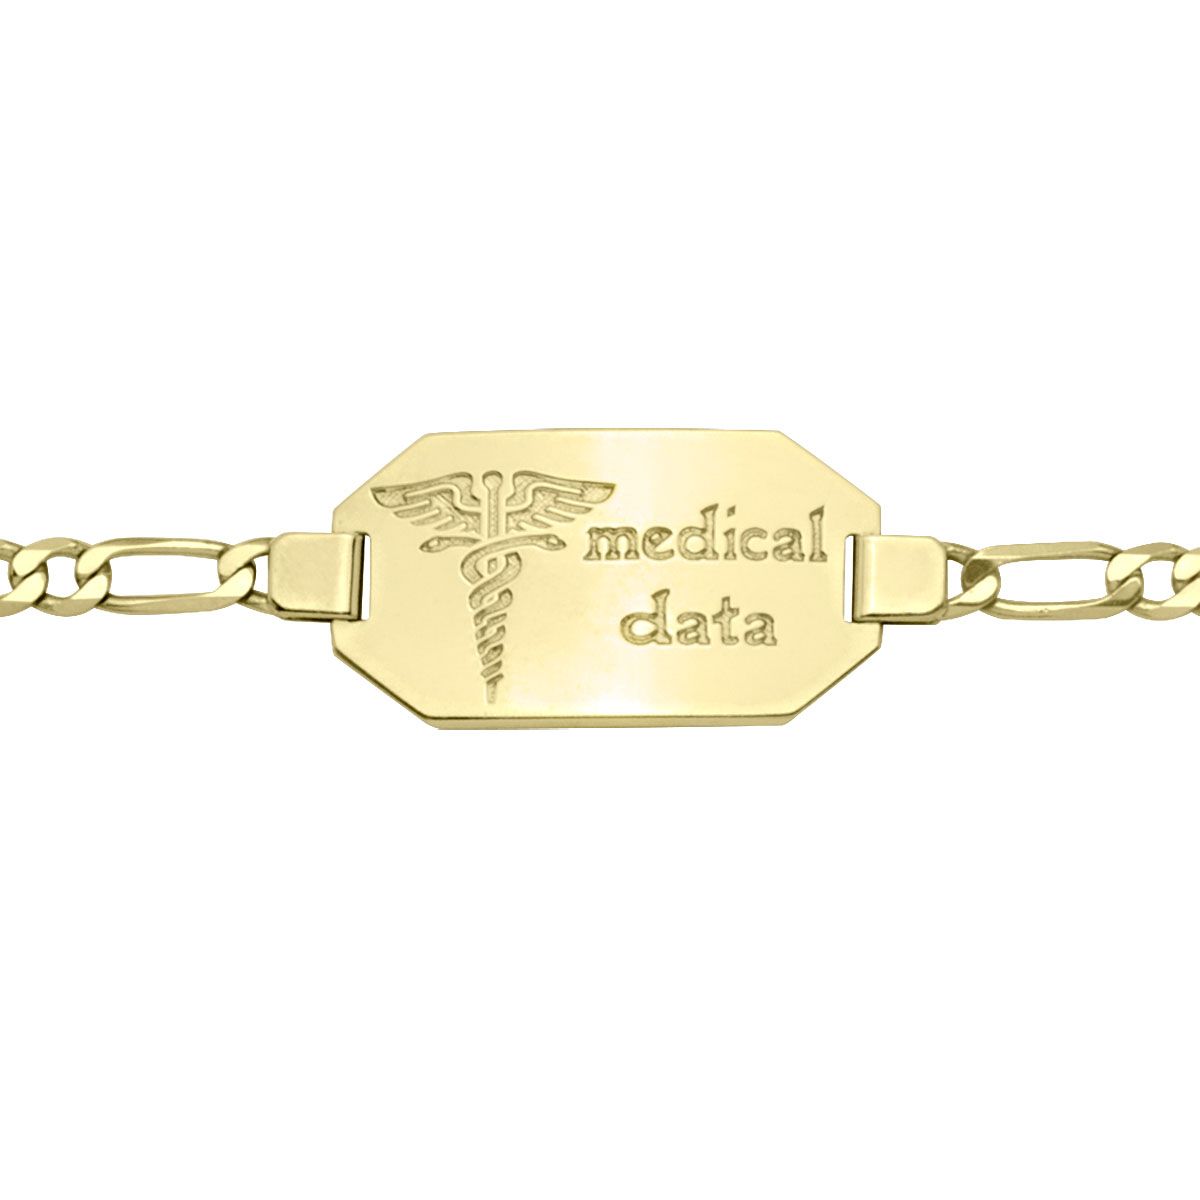 BM0102, Gold Bracelet, Medical ID, Yellow or White Gold, Engravable